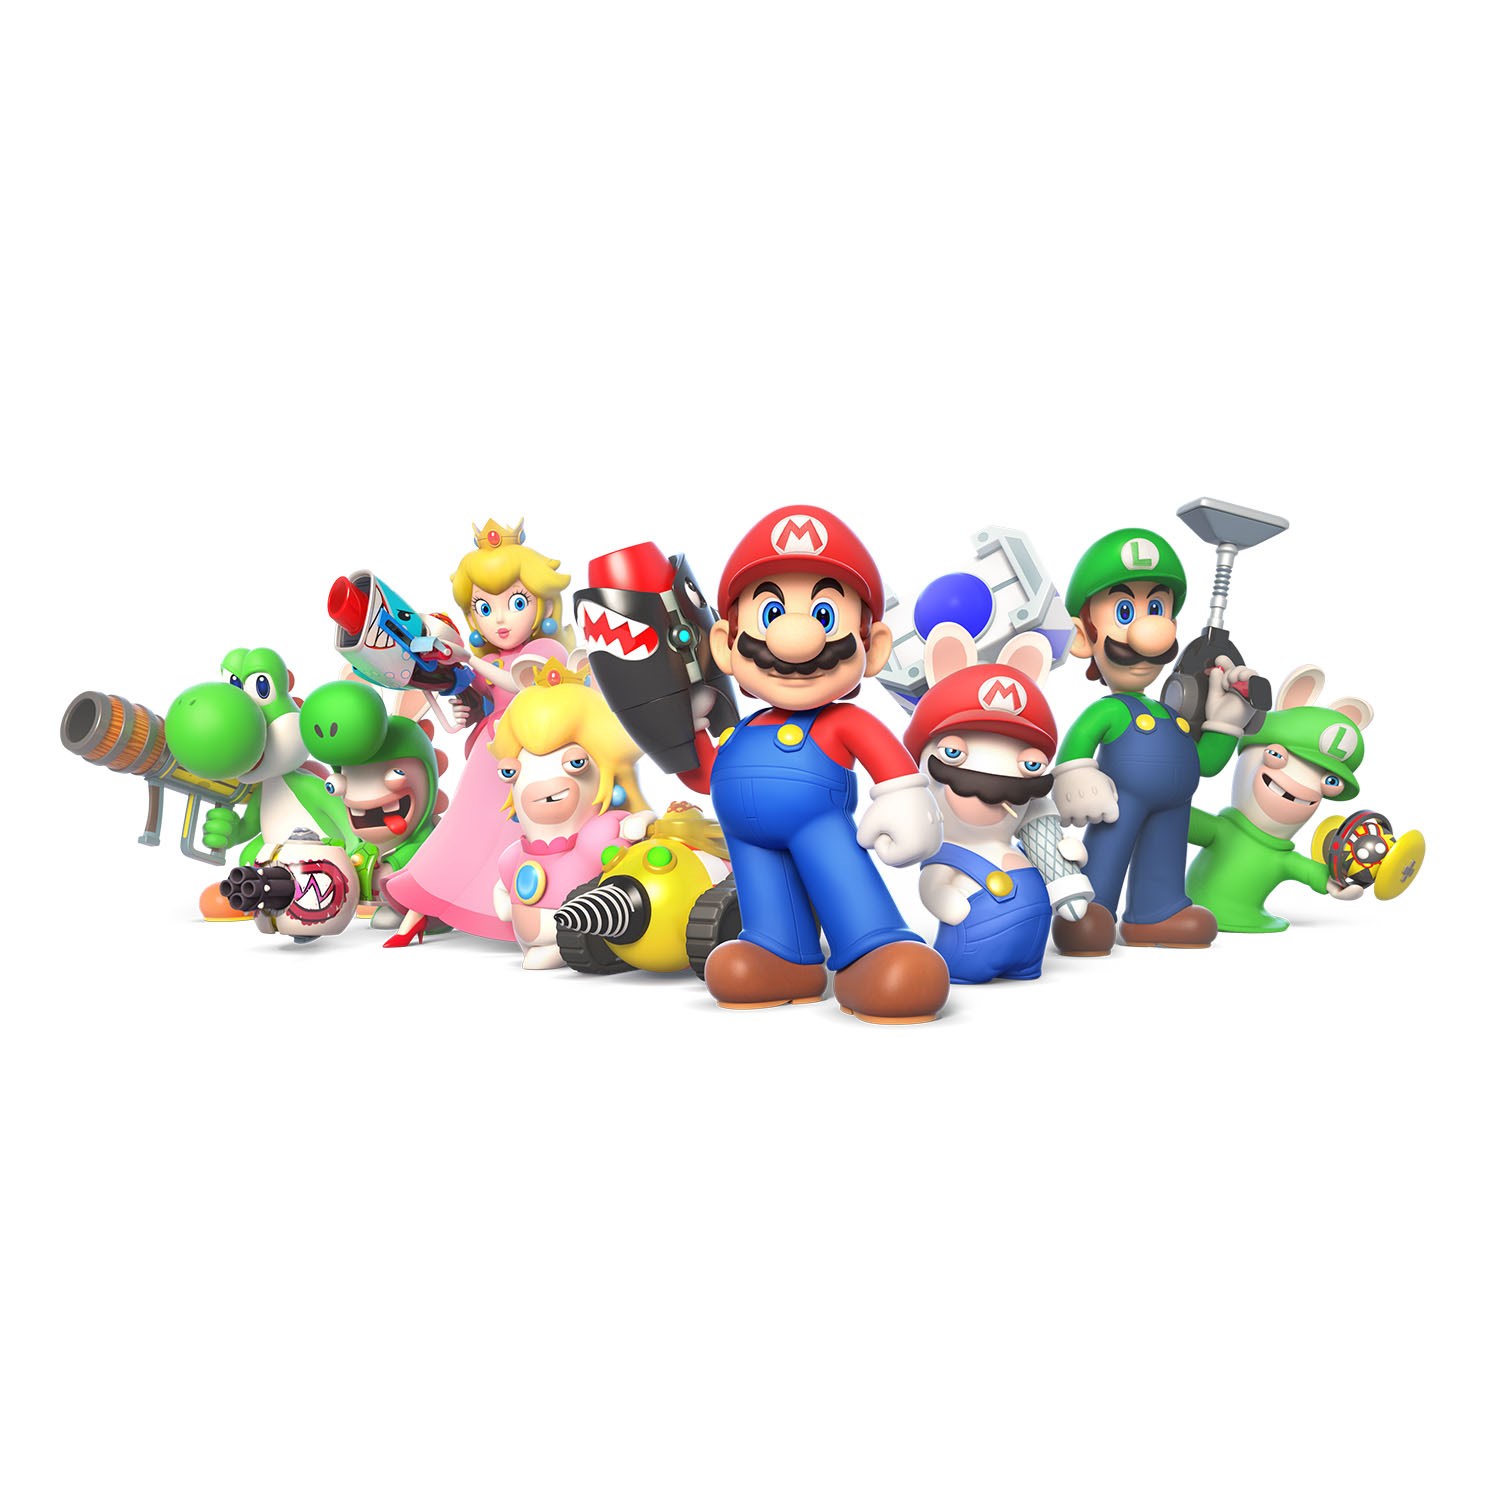 Mario + Rabbids Kingdom Battle - Nintendo Switch - image 5 of 6